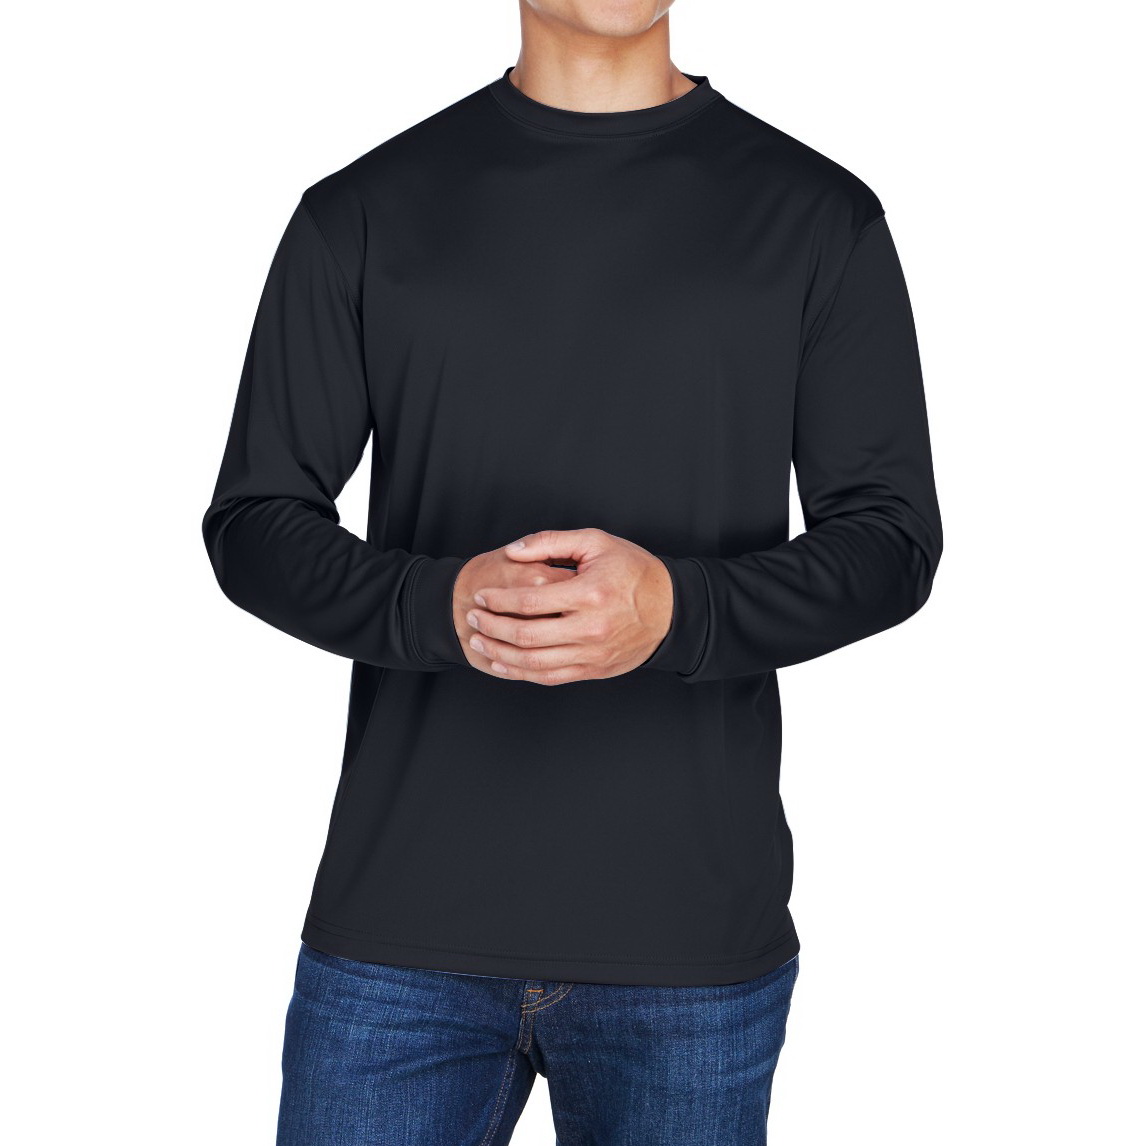 Adult Cool & Dry Sport Long-Sleeve T-Shirt